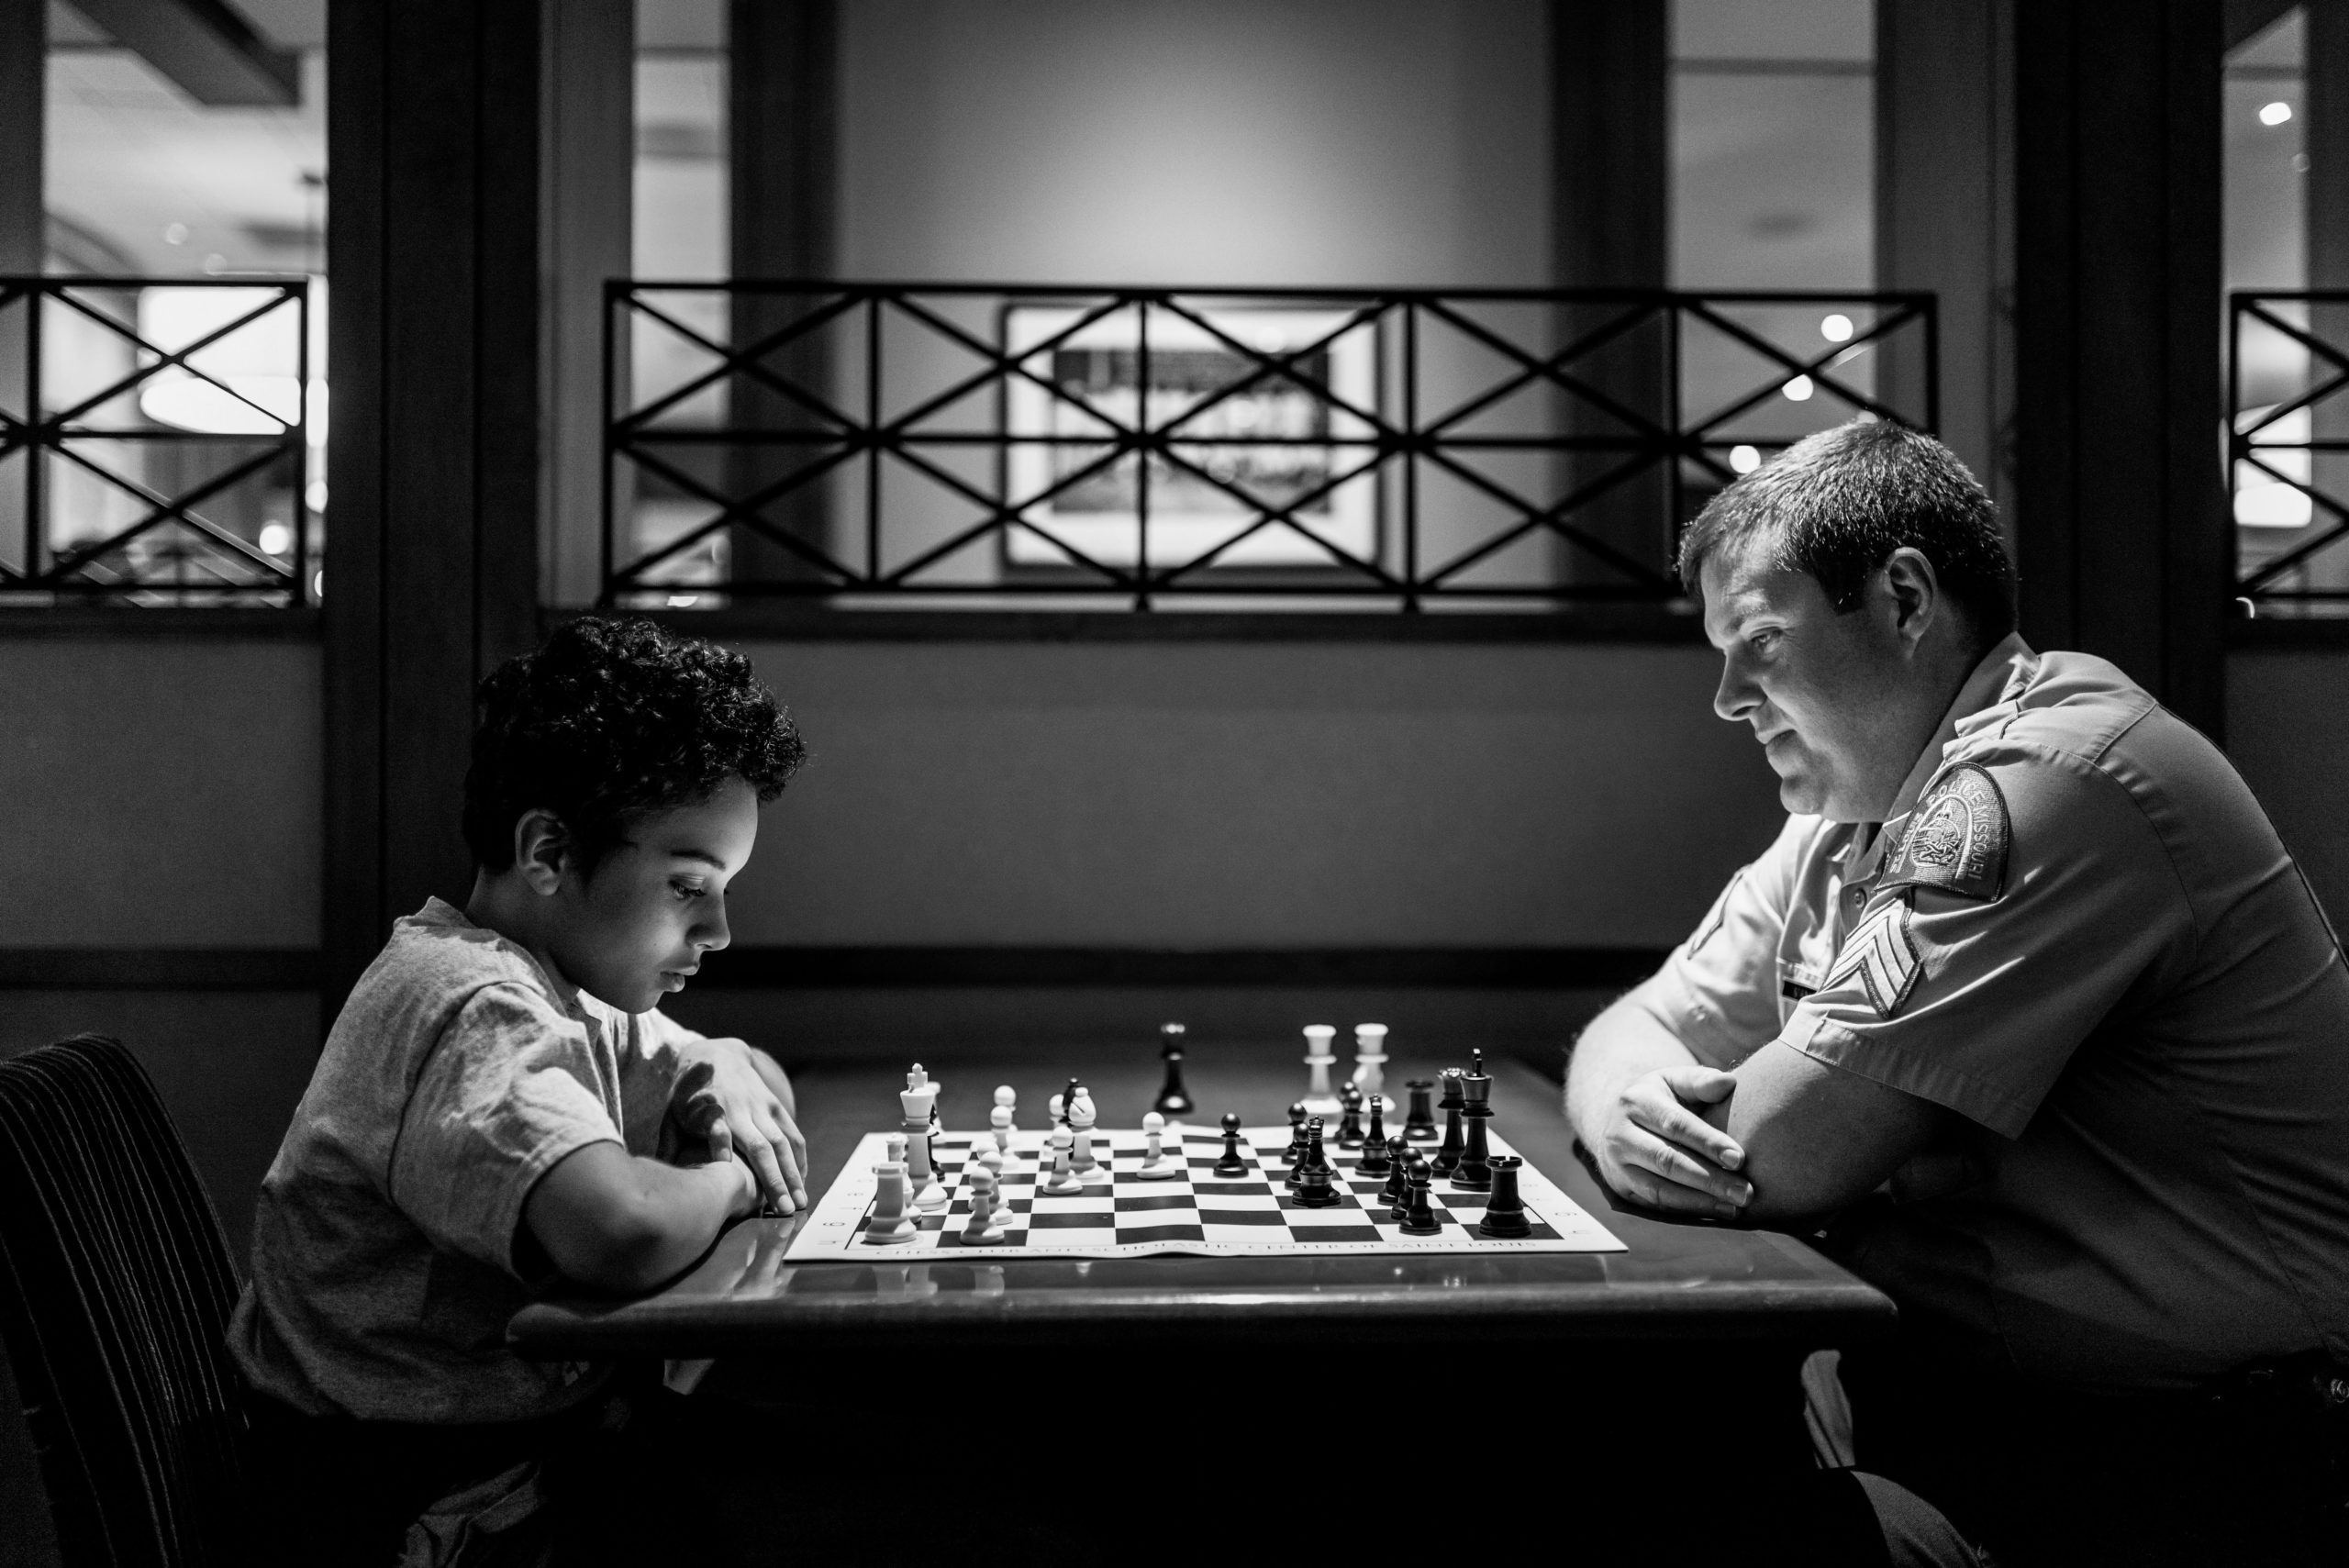 ChessMaine: Scholastic Team State Championship Tournament Report